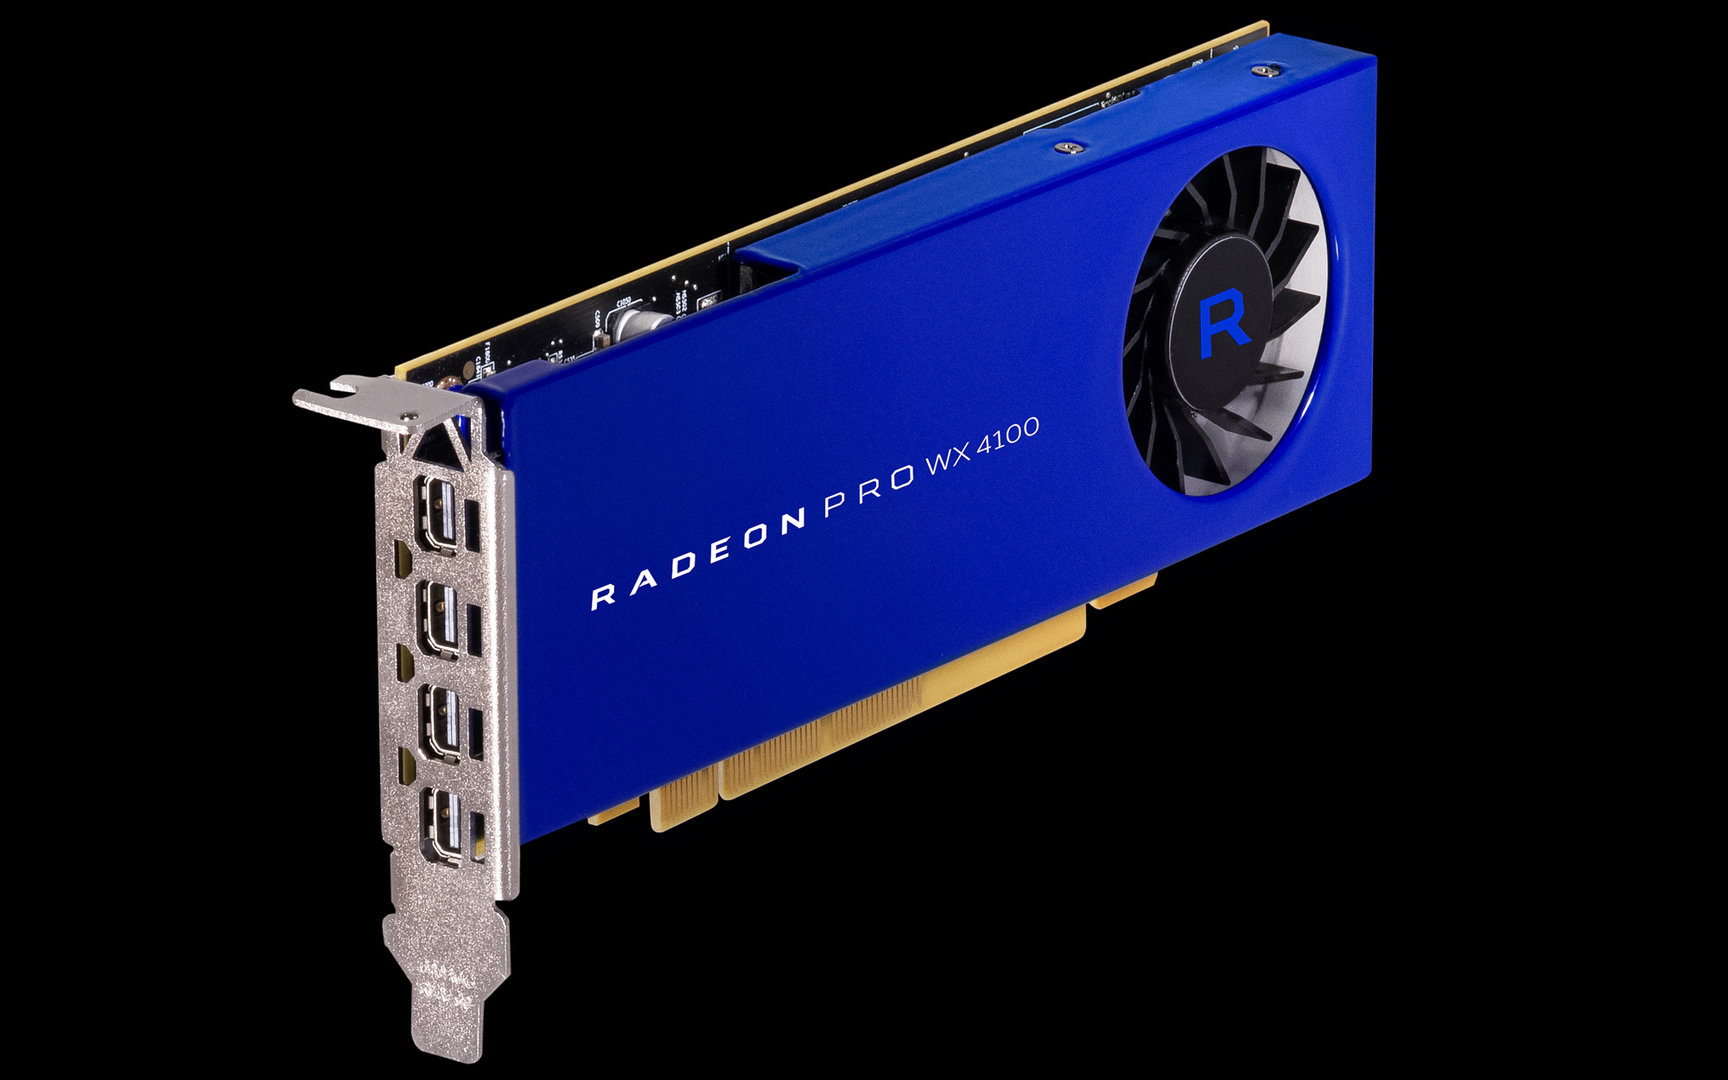 AMD’den 1TB SSD'li Radeon Pro SSG ekran kartı